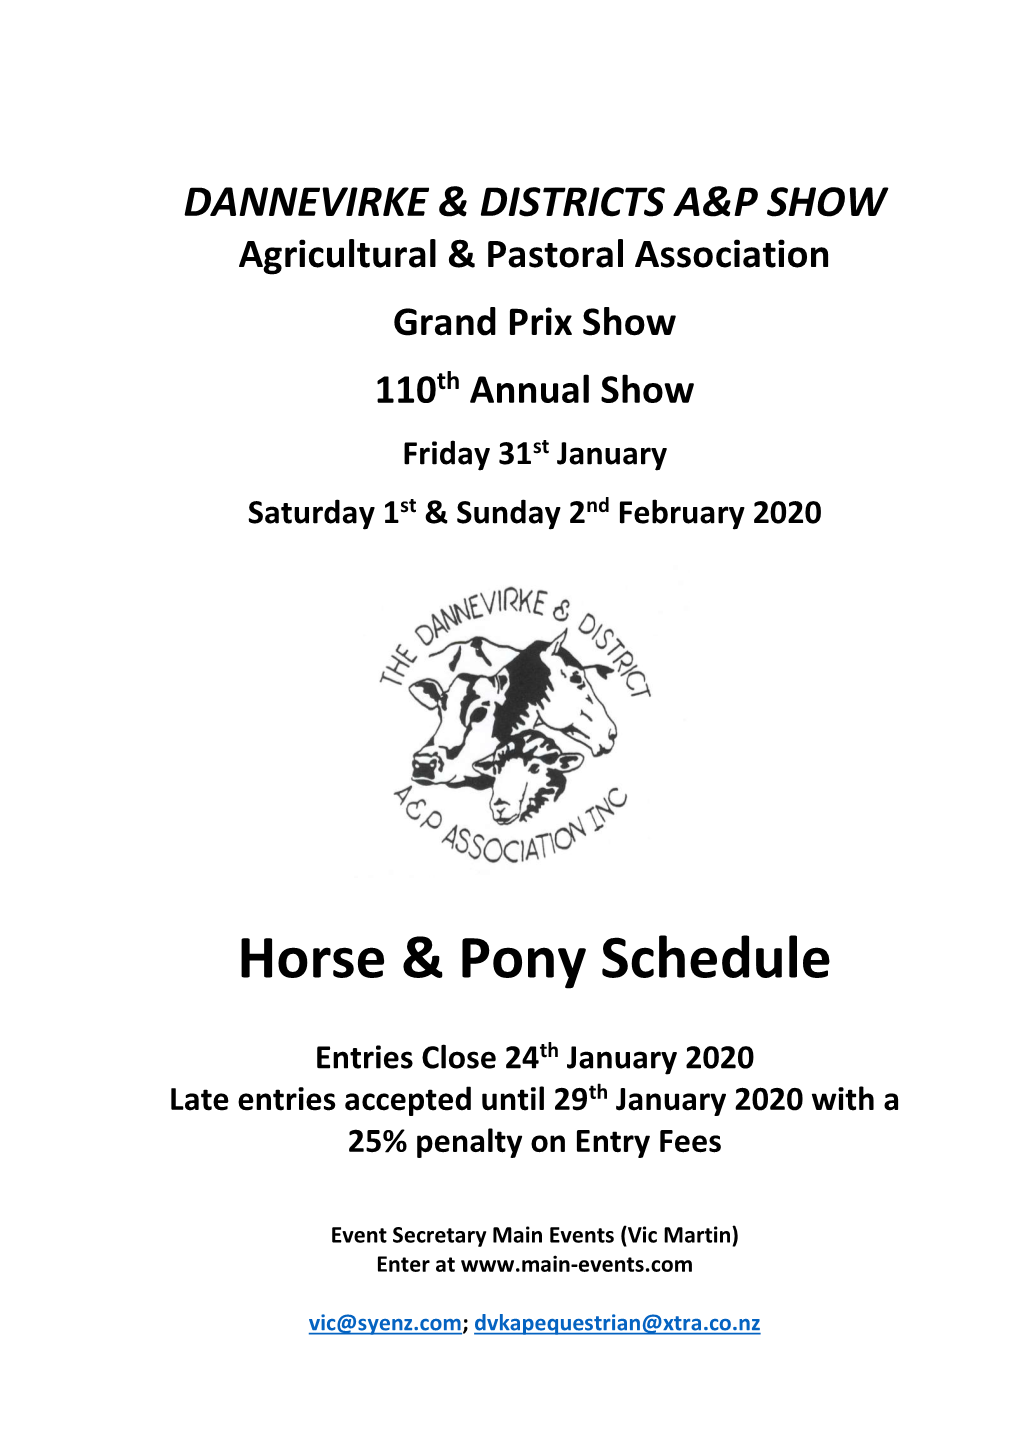 Horse & Pony Schedule